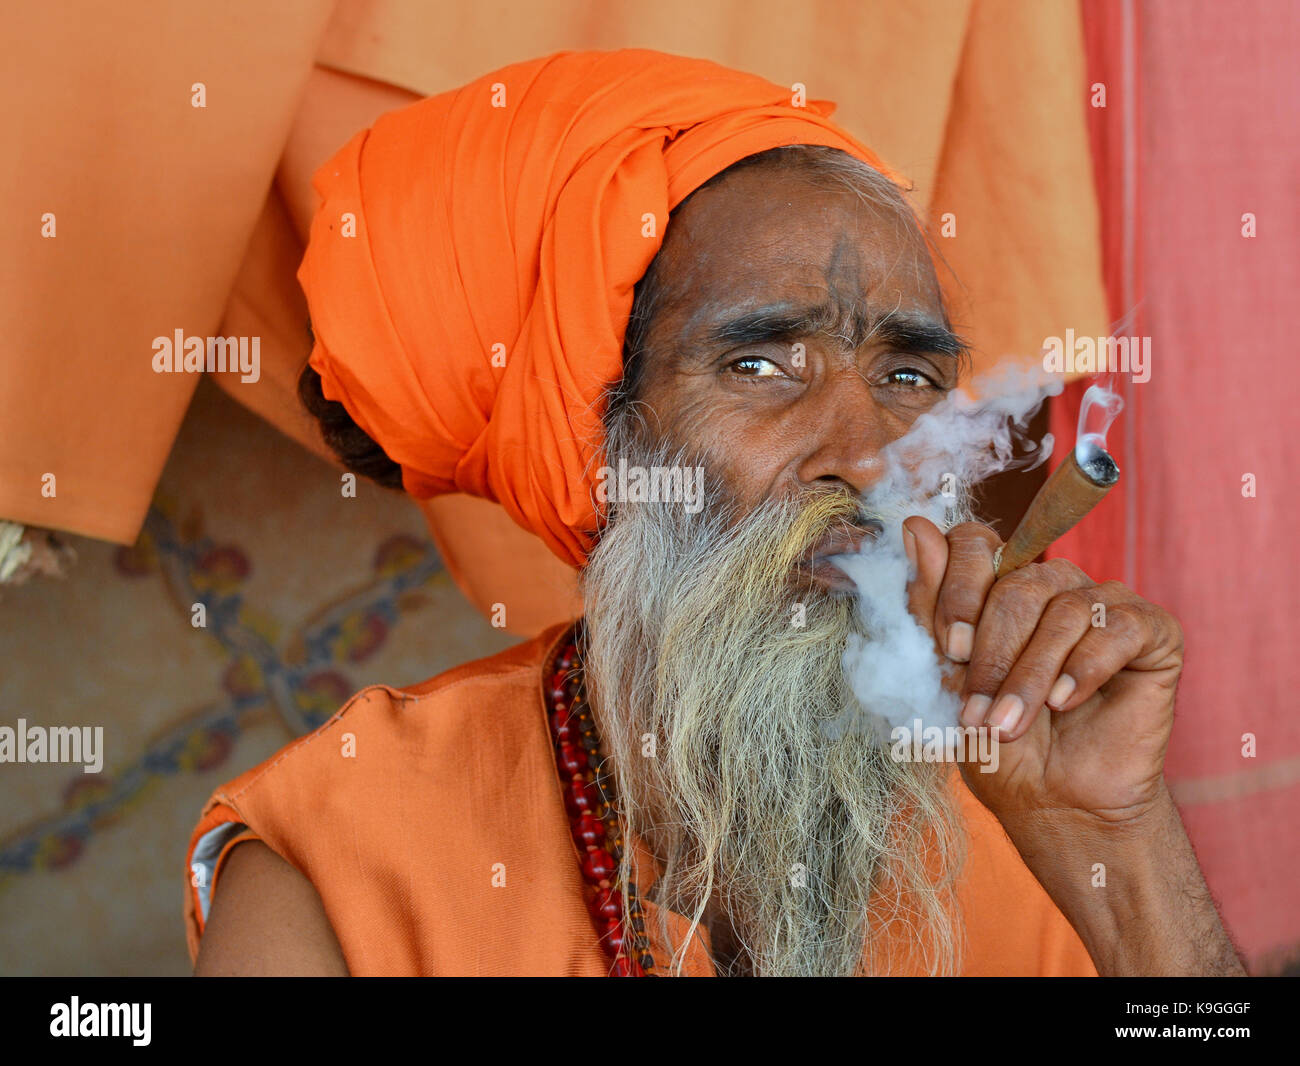 Old sadhu with dread bun and orange headwrap smoking hashish (marijuana) in a chillum pipe Stock Photo